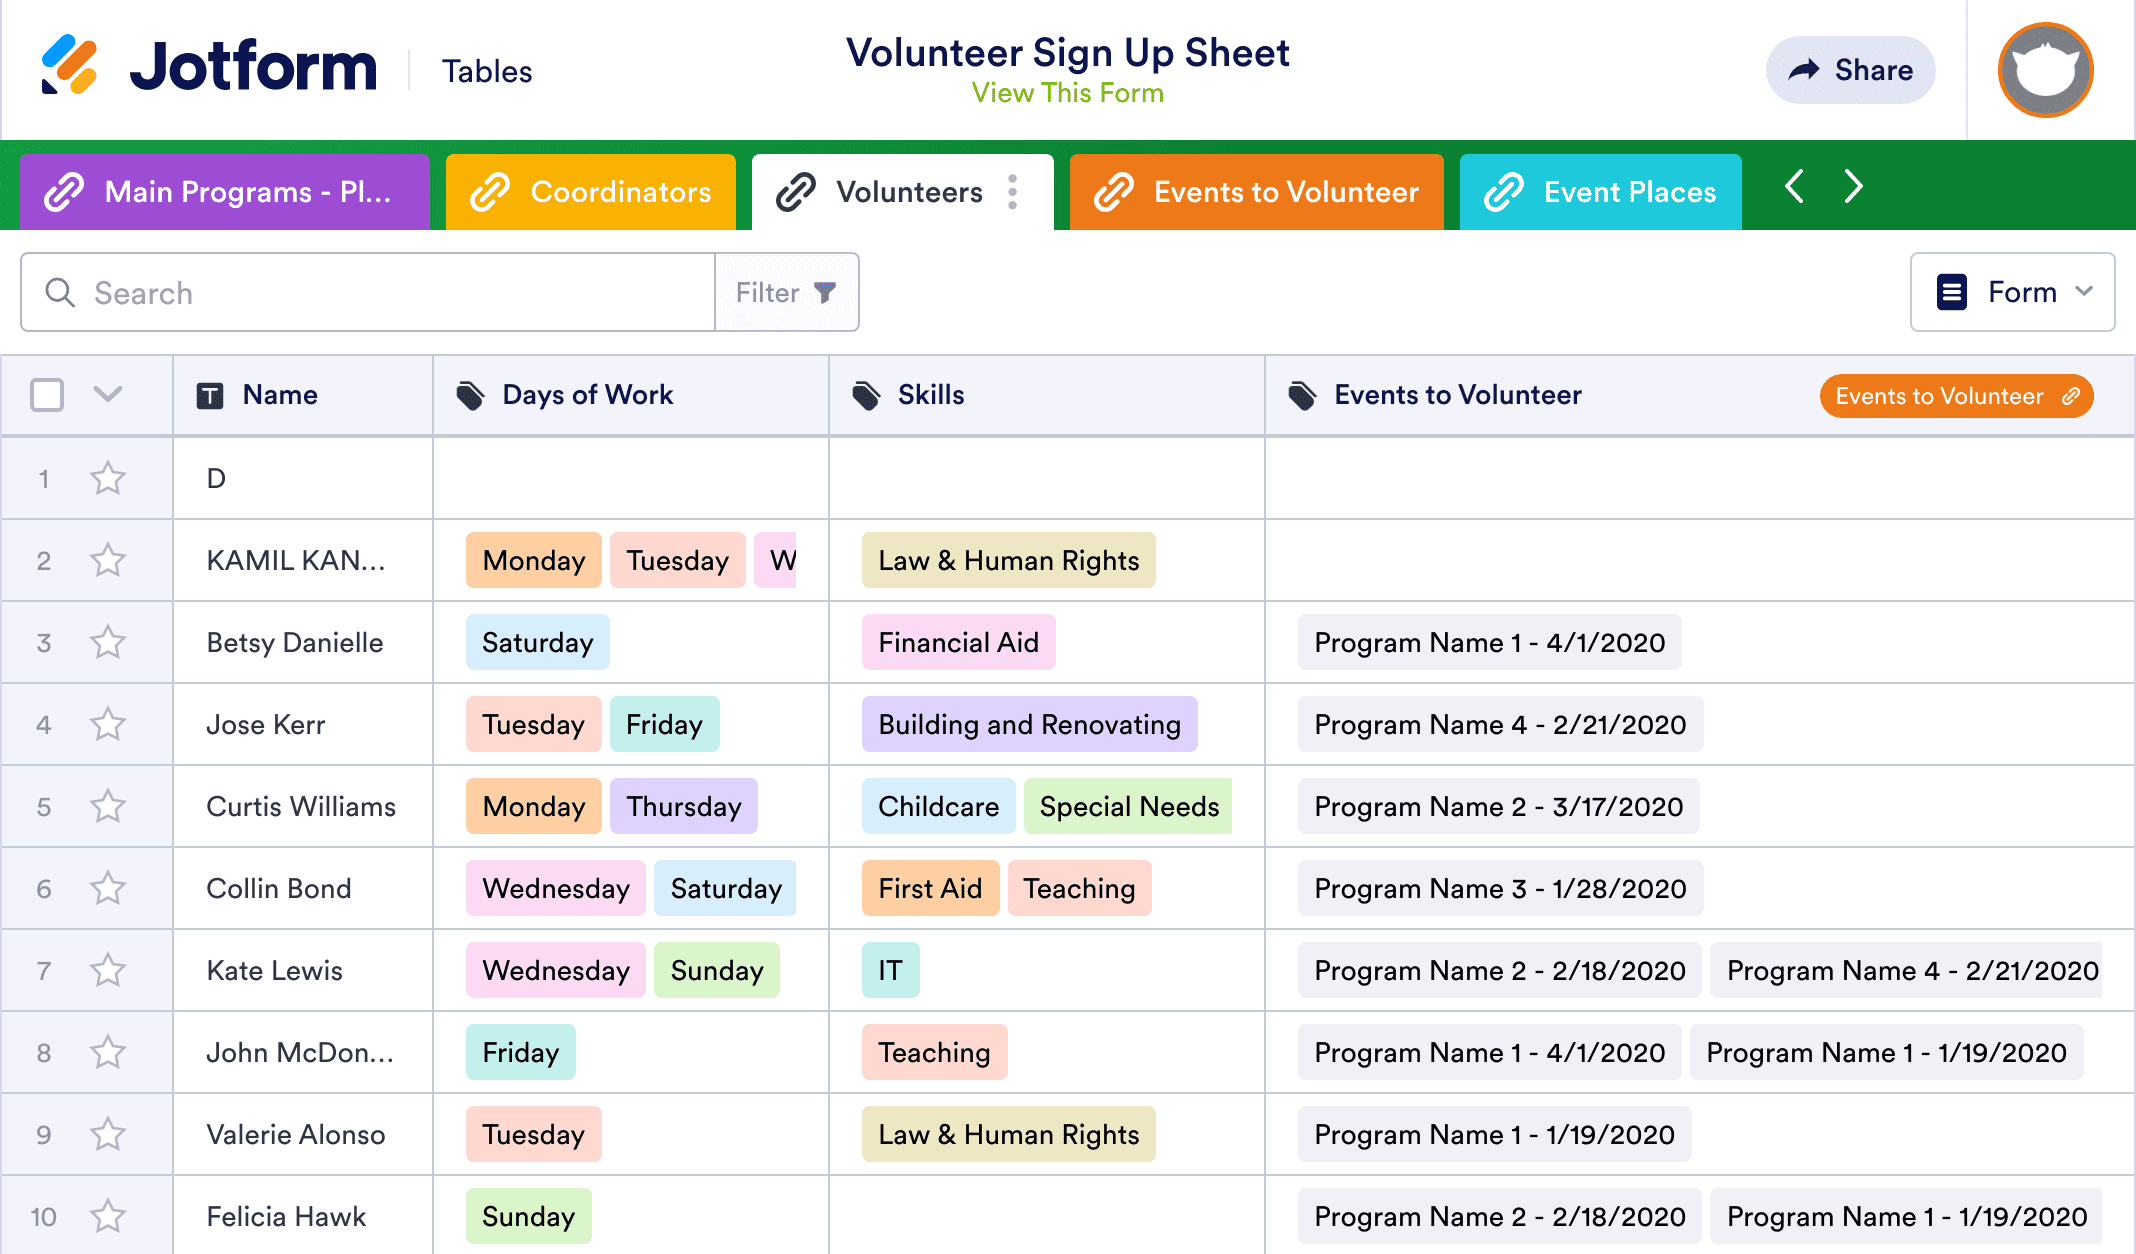 Volunteer Sign Up Sheet Template | Jotform Tables